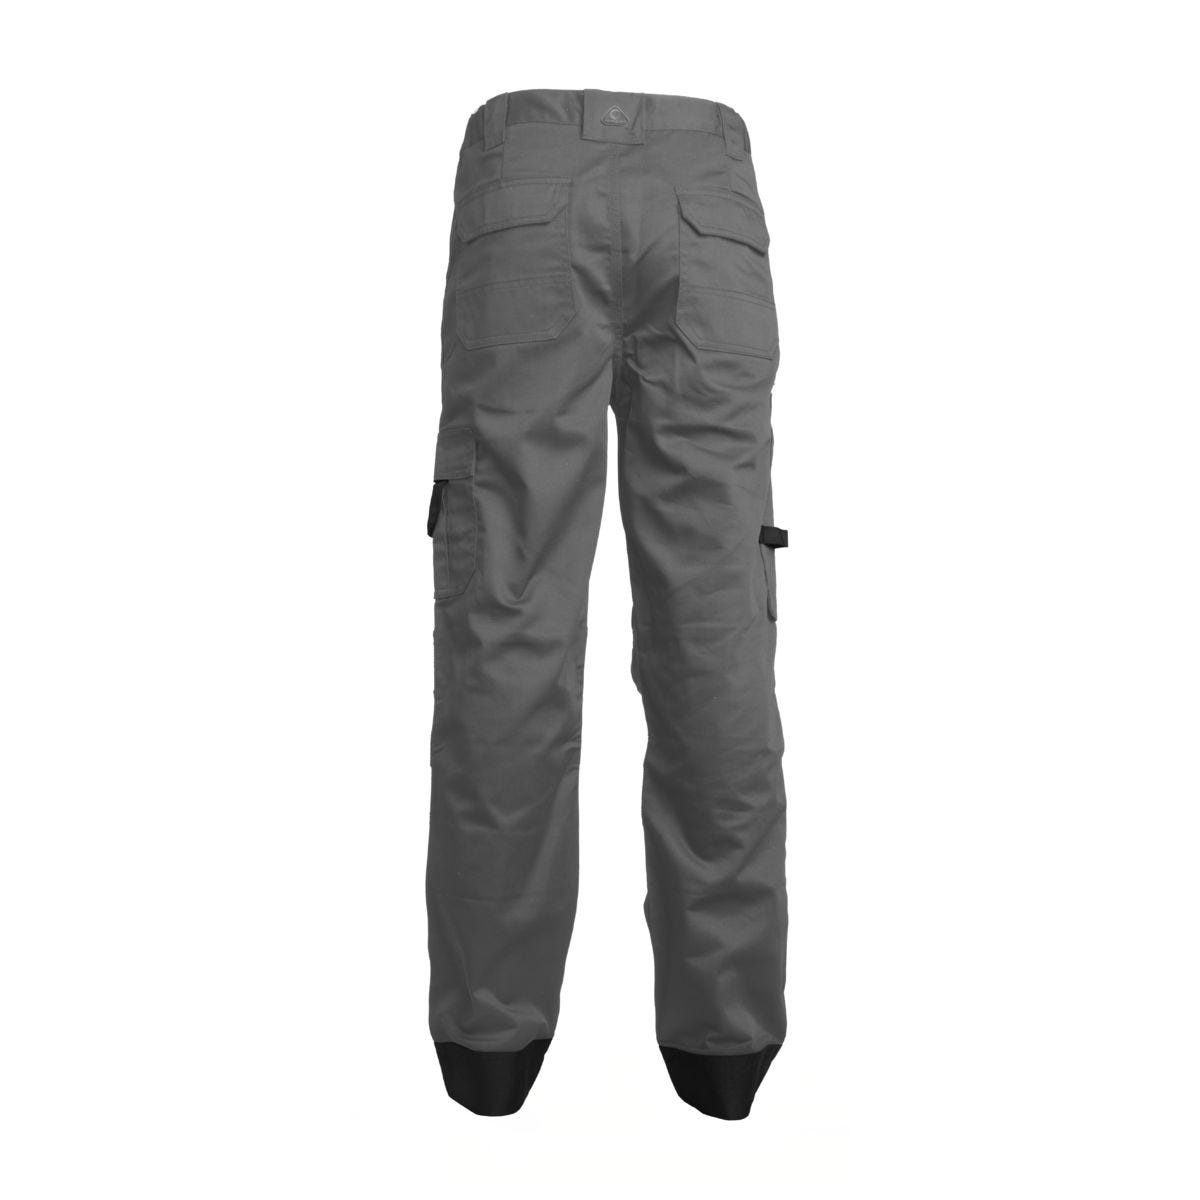 Pantalon CLASS gris moyen - COVERGUARD - Taille S 1